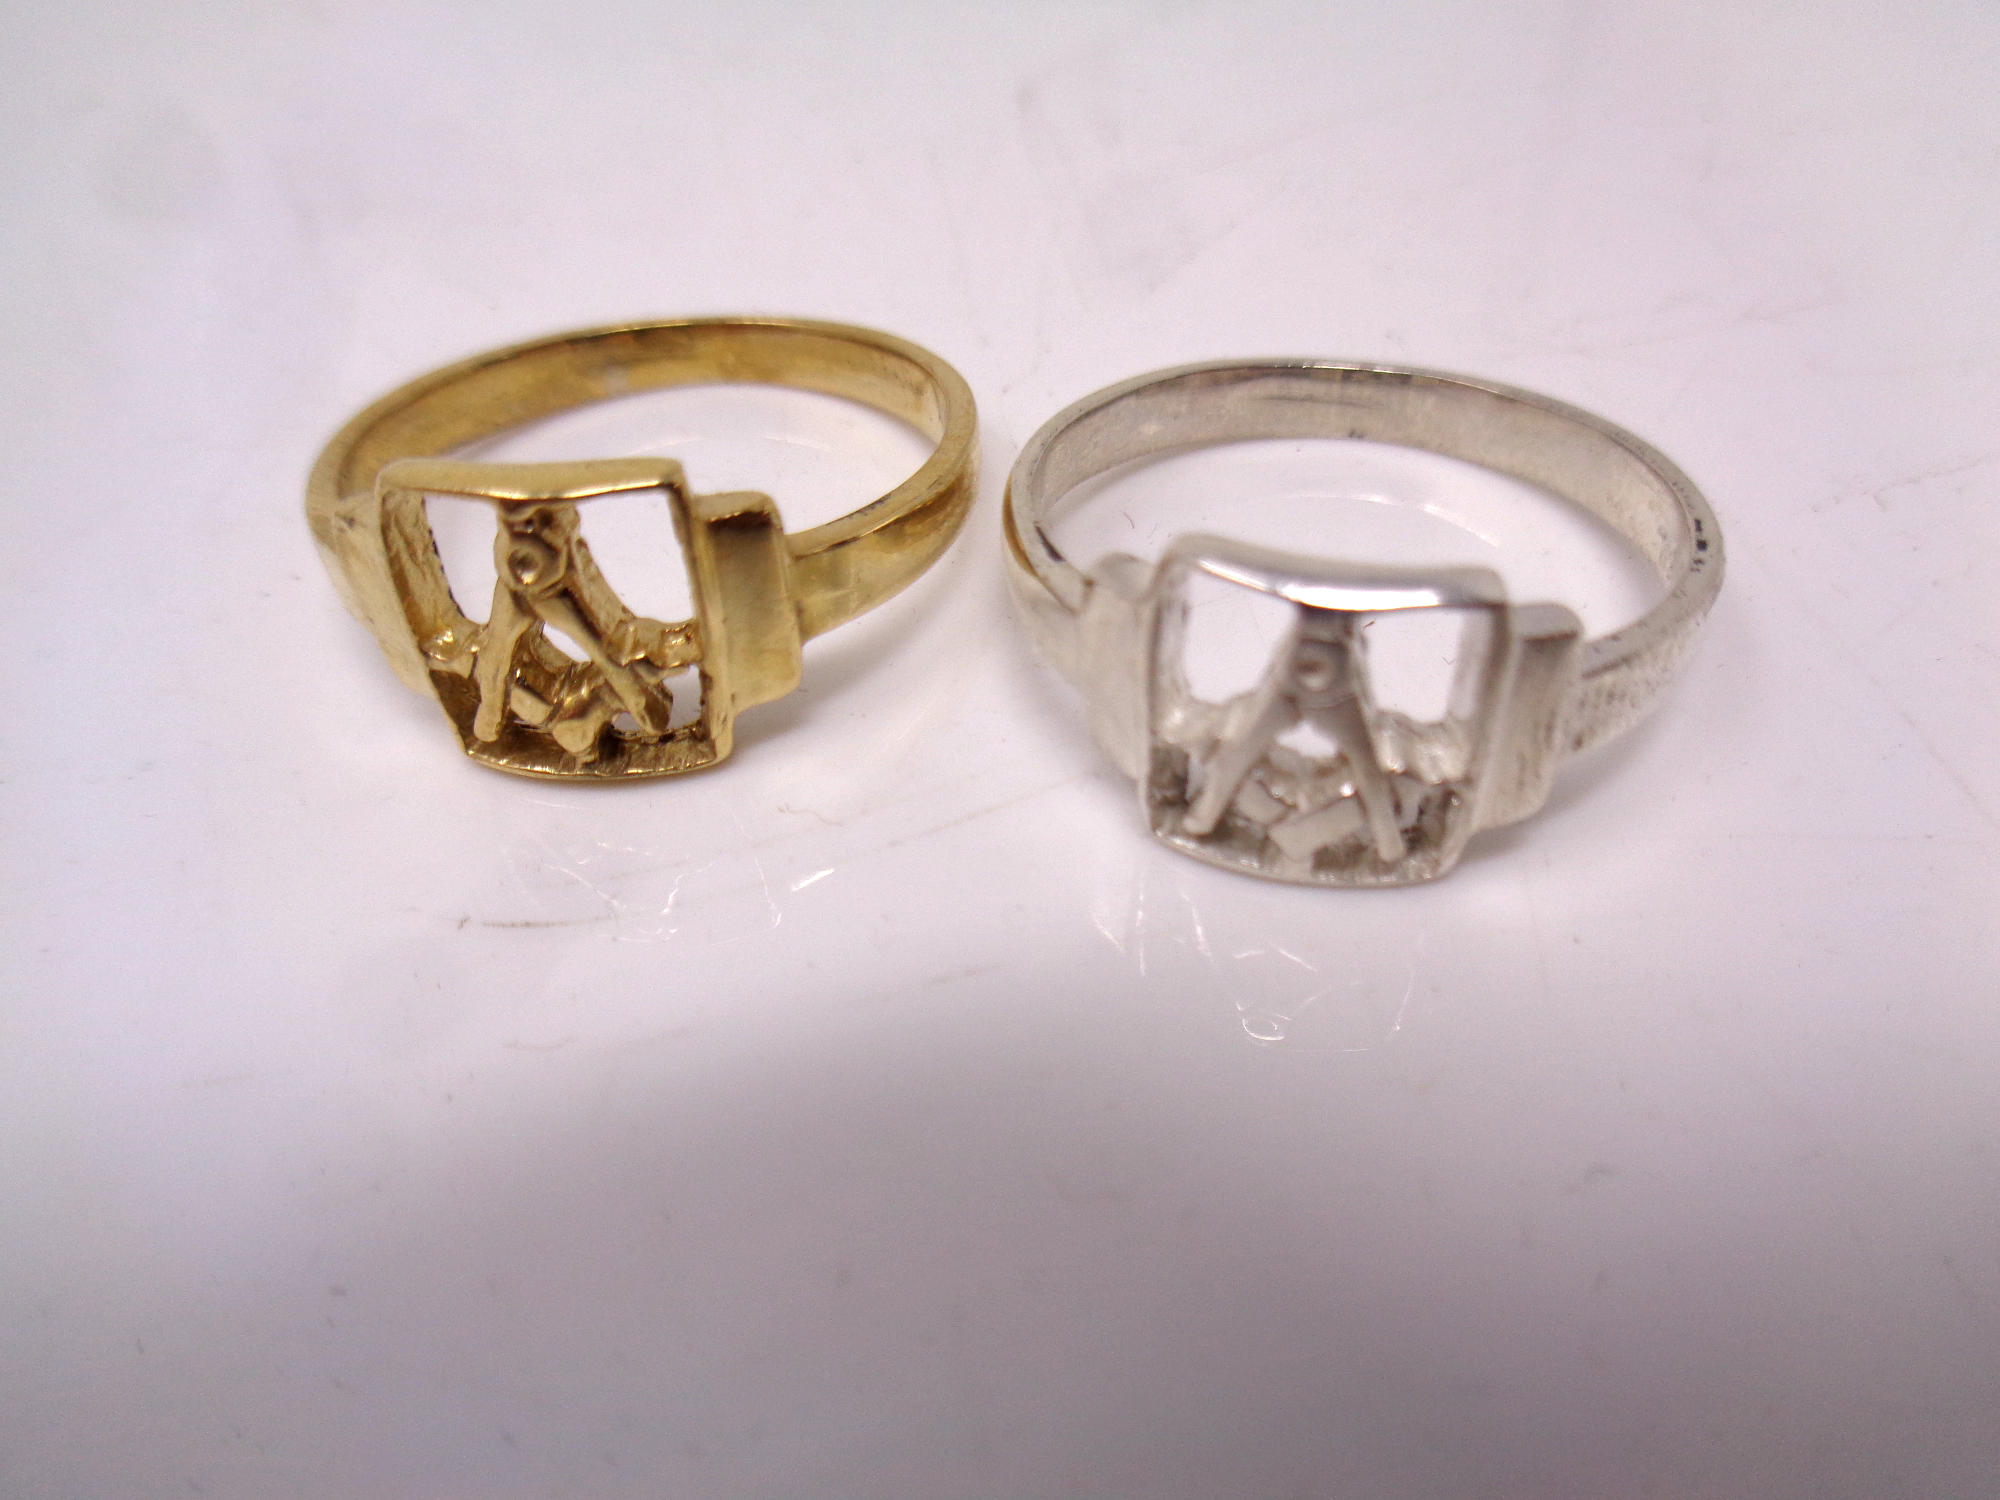 Two silver Masonic rings